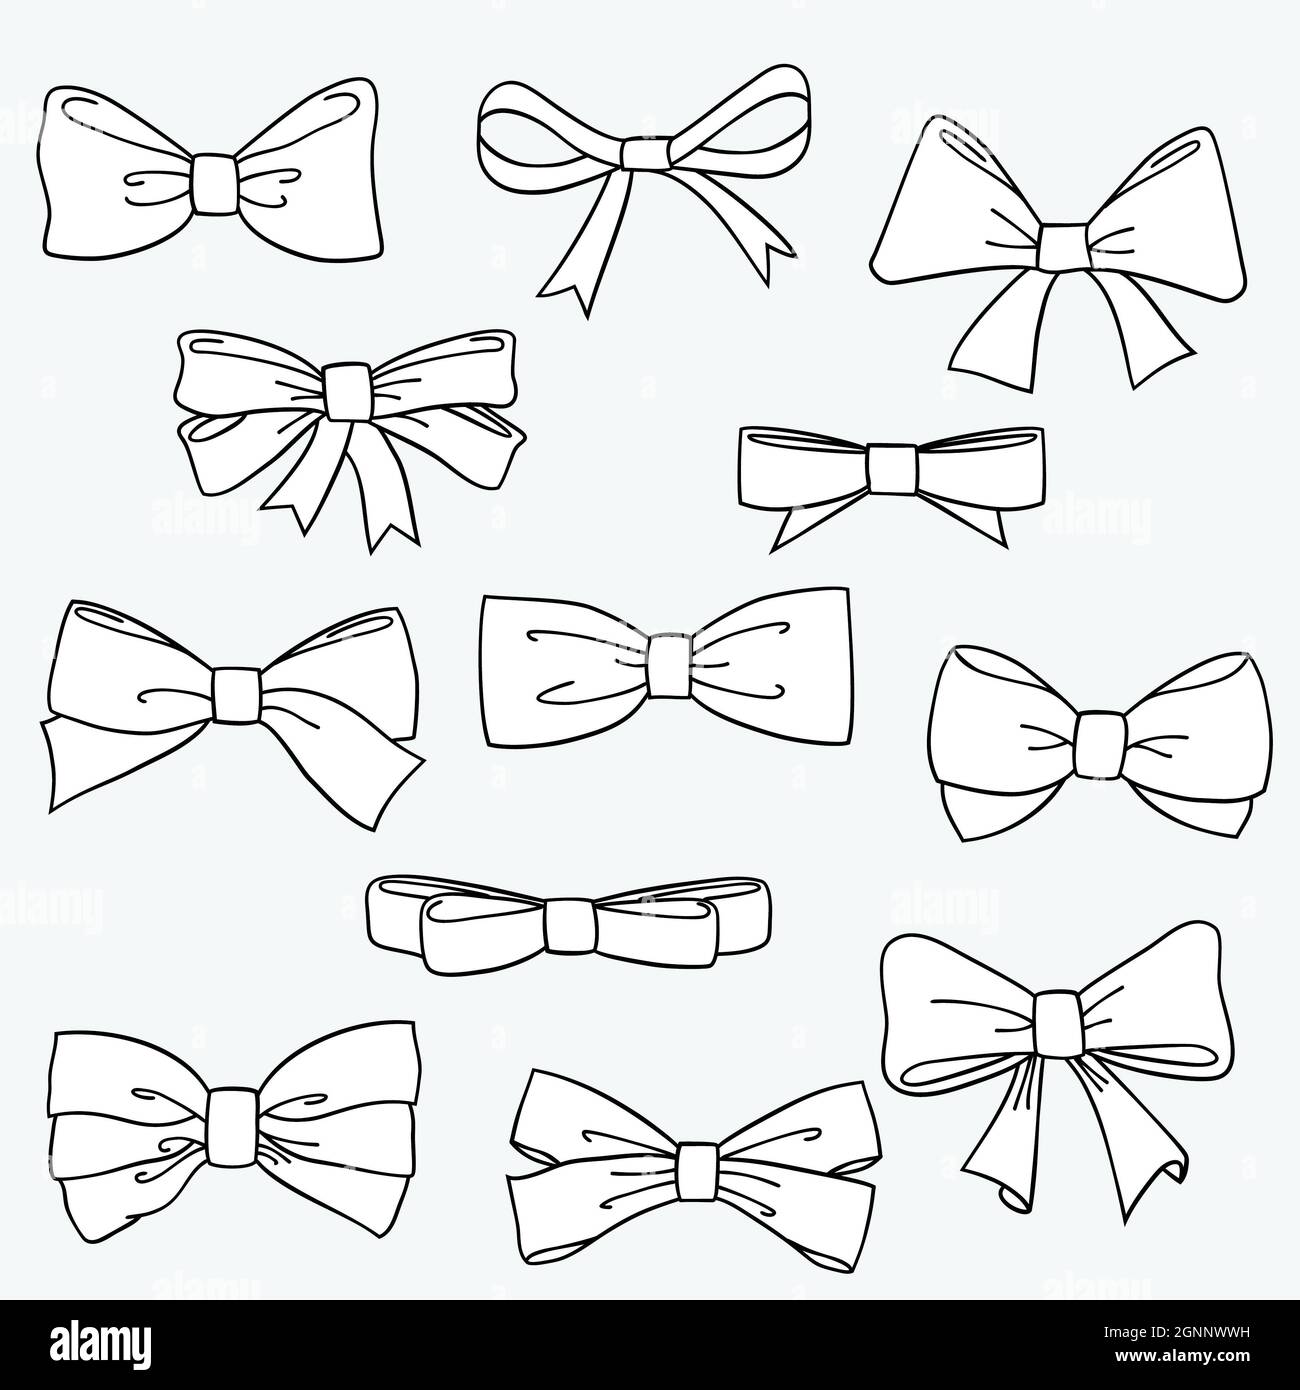 Hand Drawn Bows. Bow Tie illustration. Ribbon Fashion Accessories ...